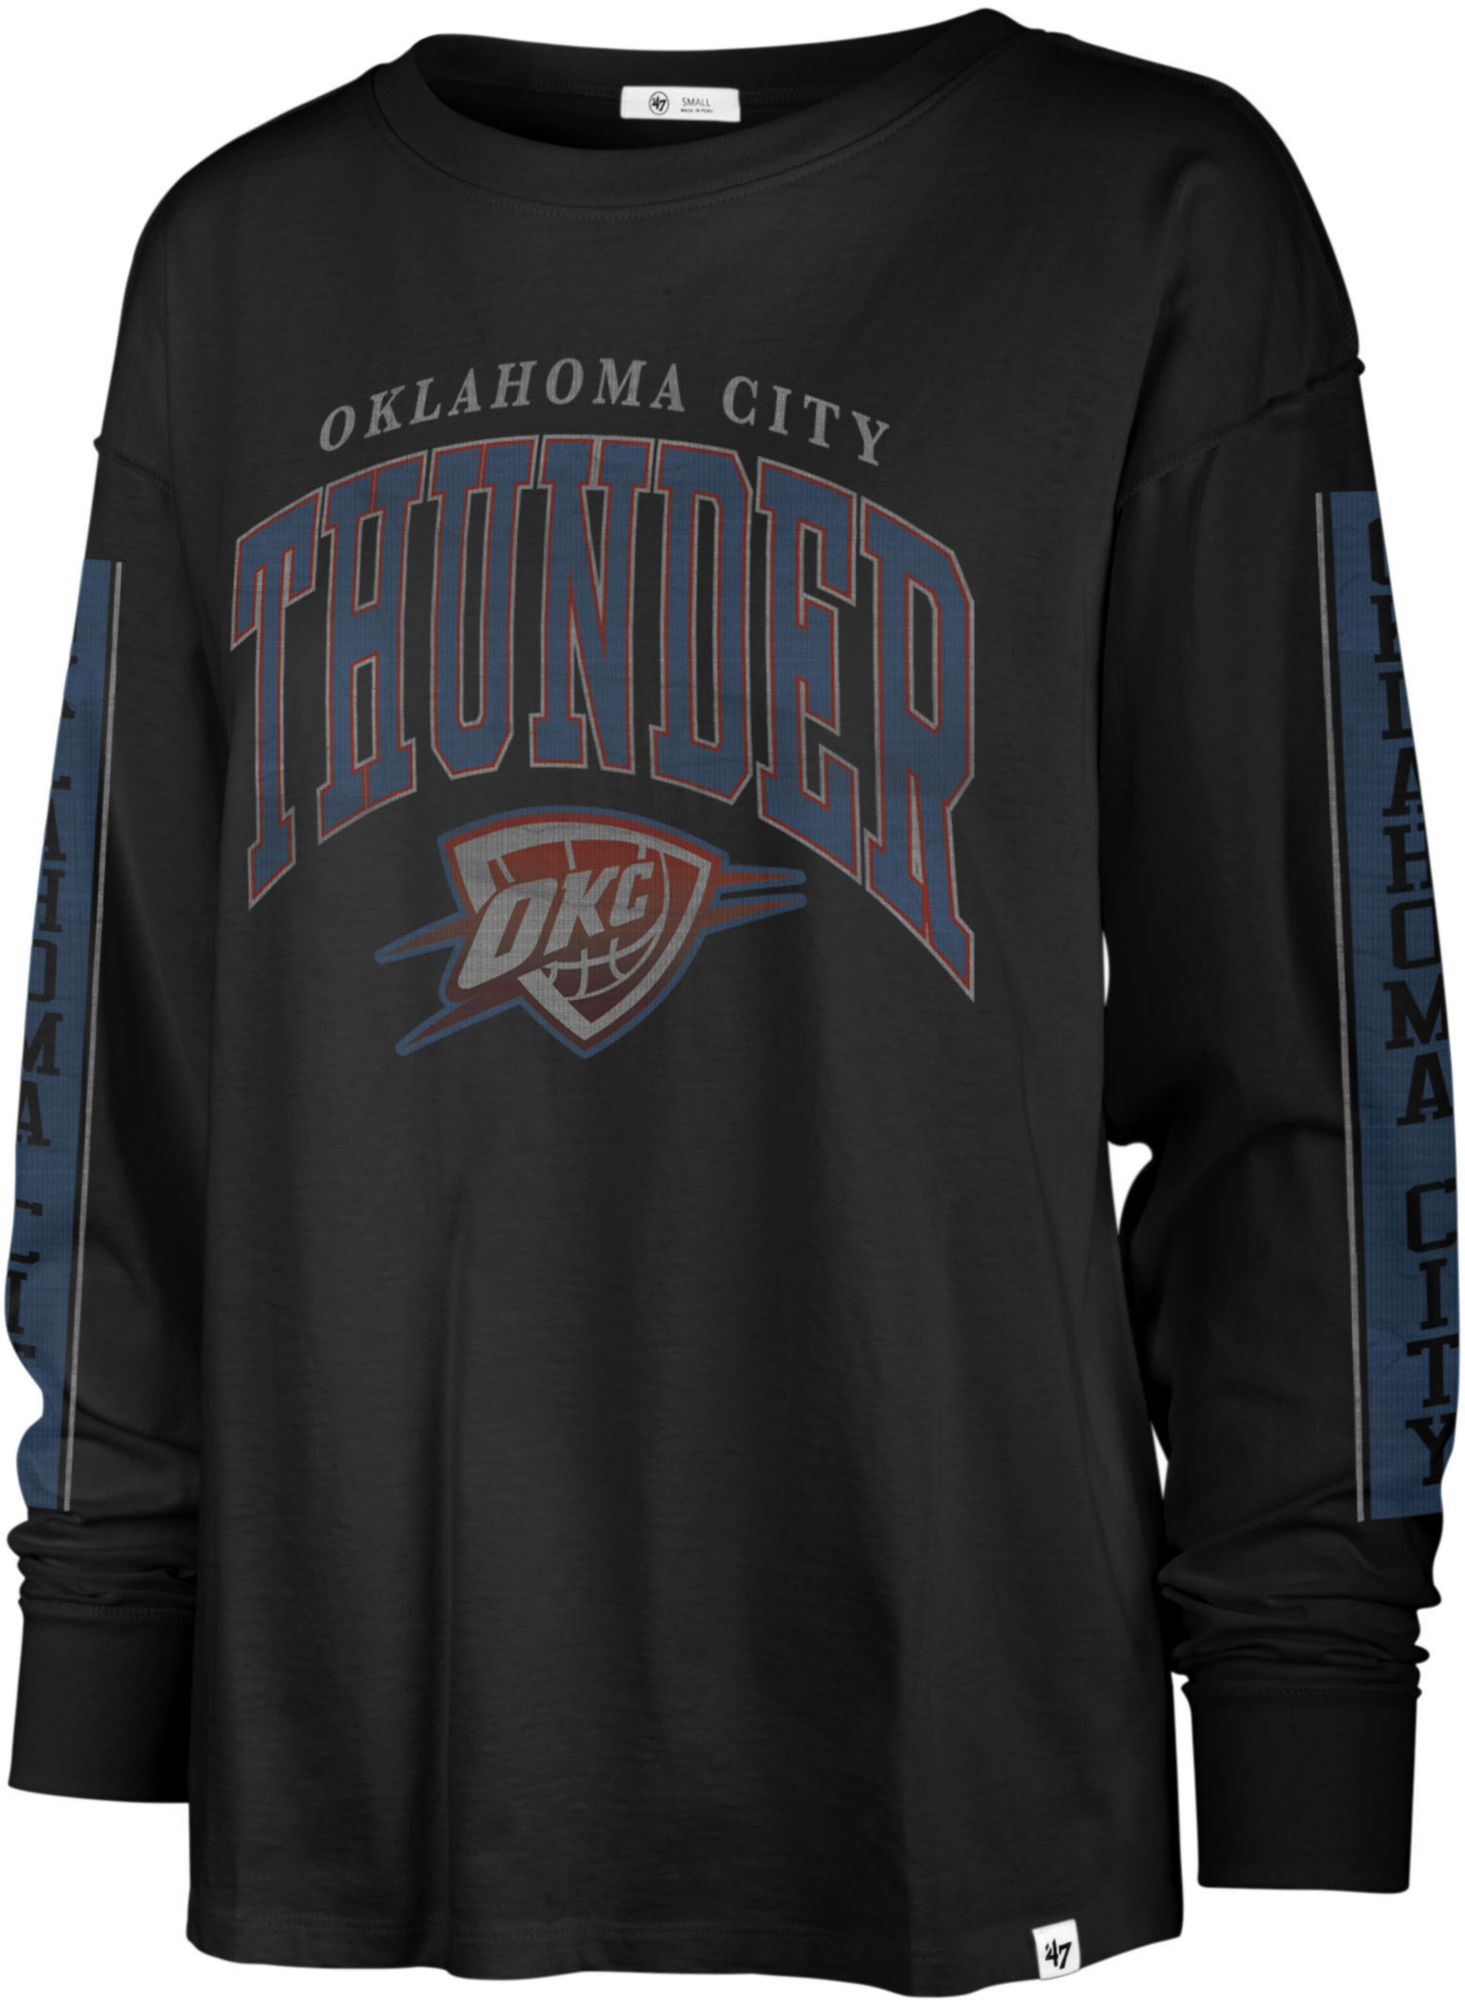 Oklahoma City Thunder merchandise